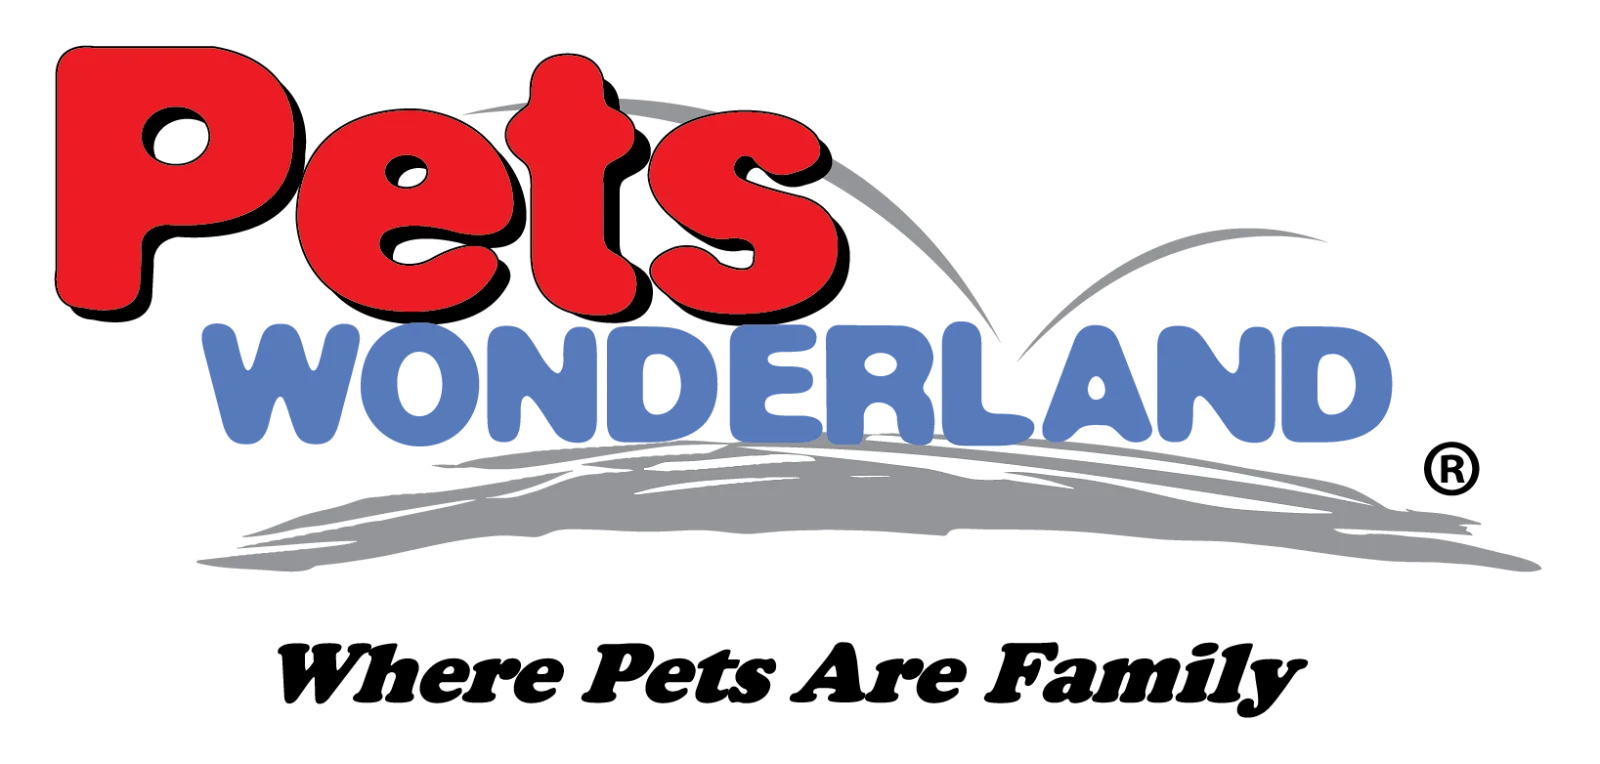 Pets wonderland